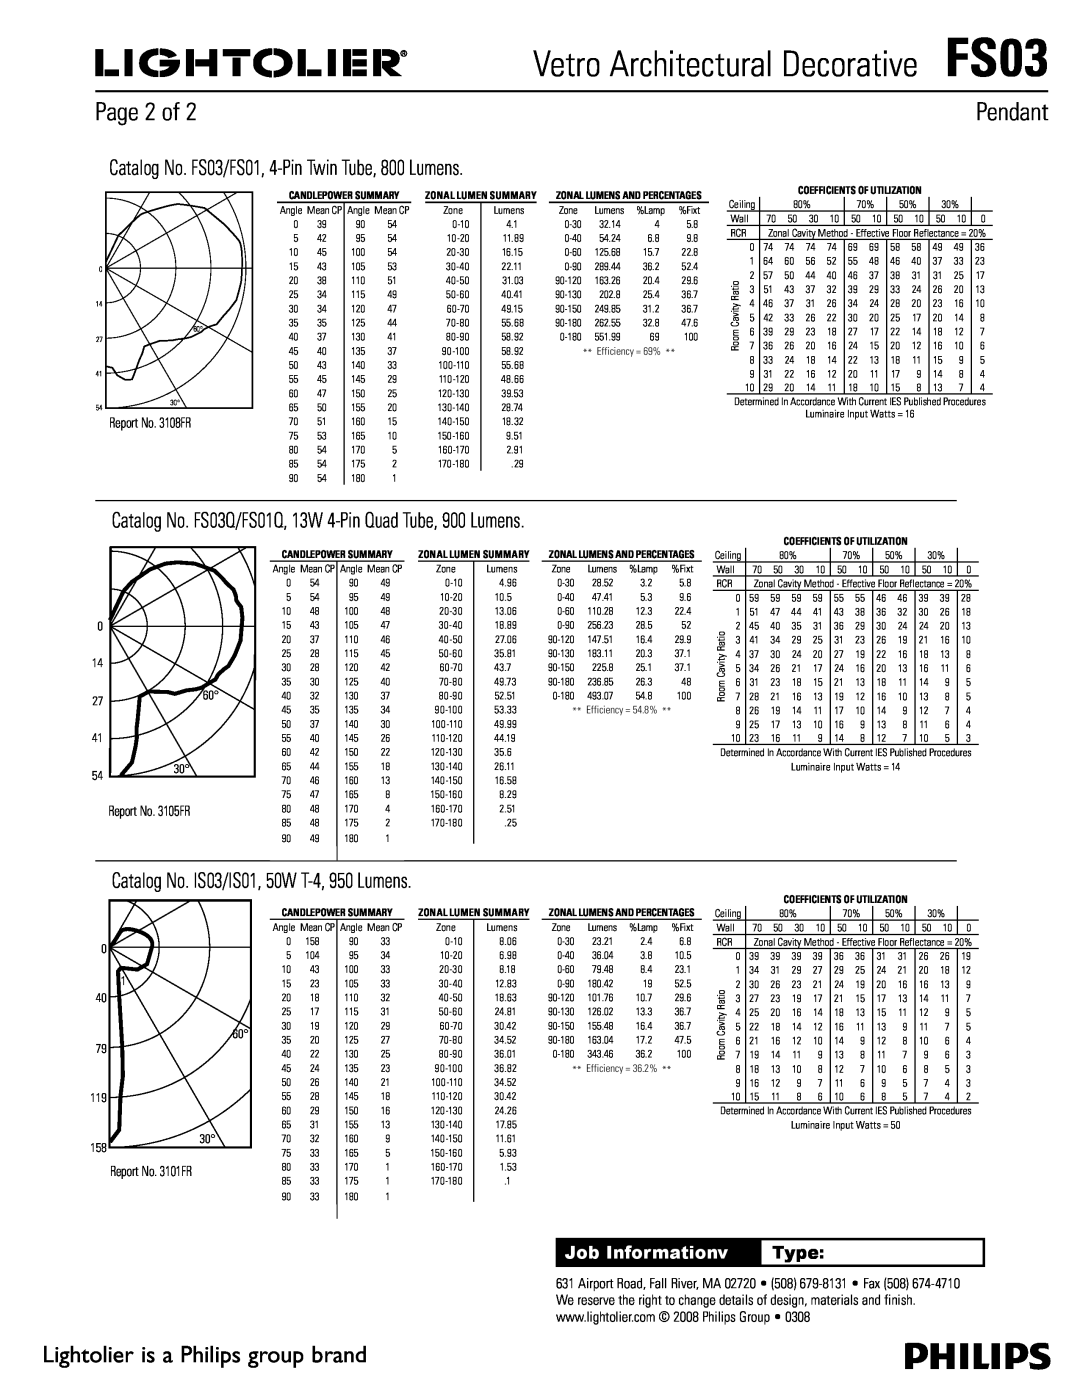 Lightolier manual Page of, Job Informationv, Type, Vetro Architectural DecorativeFS03, Pendant 